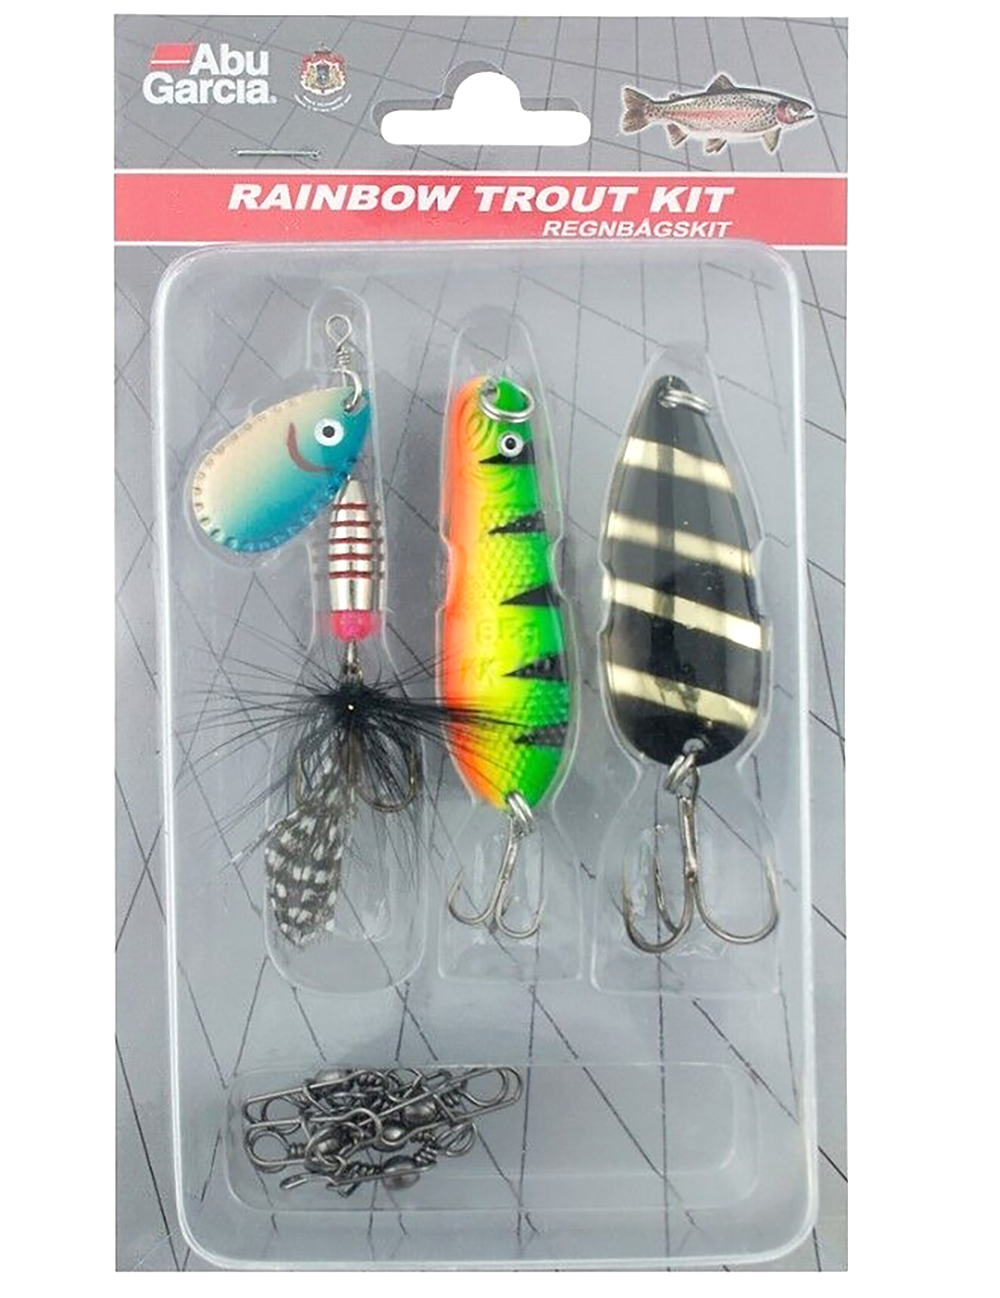 Abu Garcia Rainbow Trout Kit